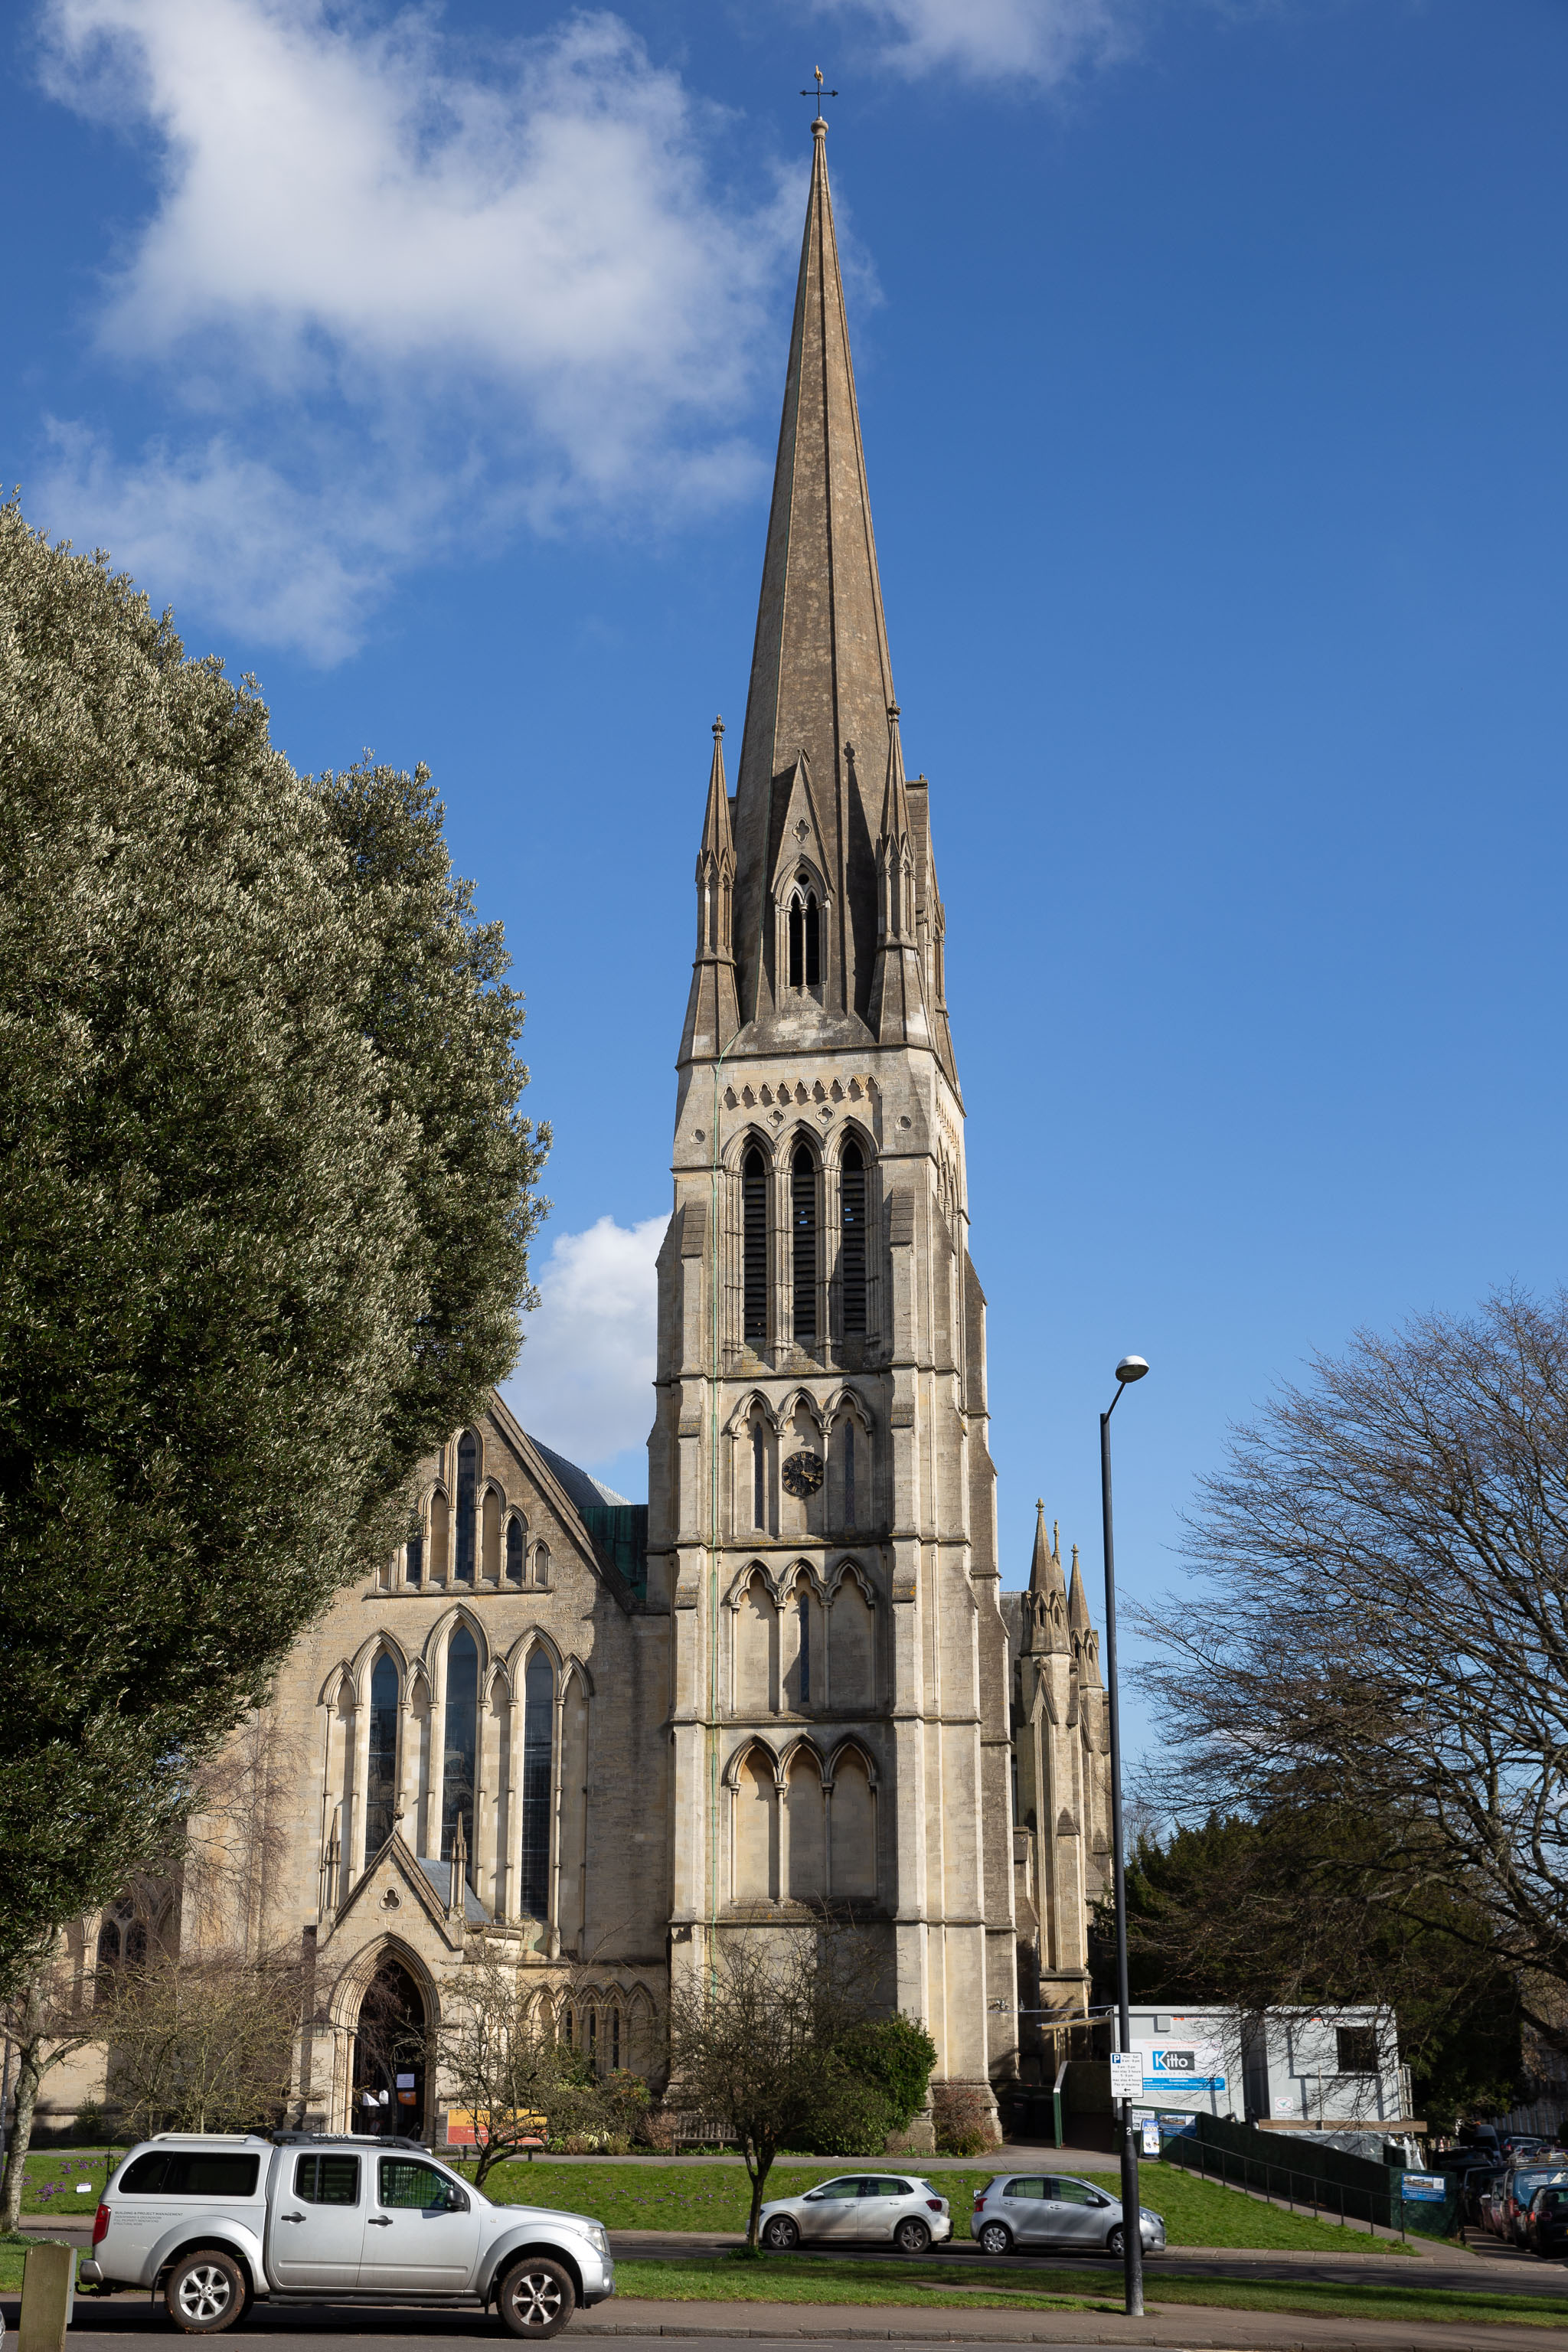 Christ Church Tower
